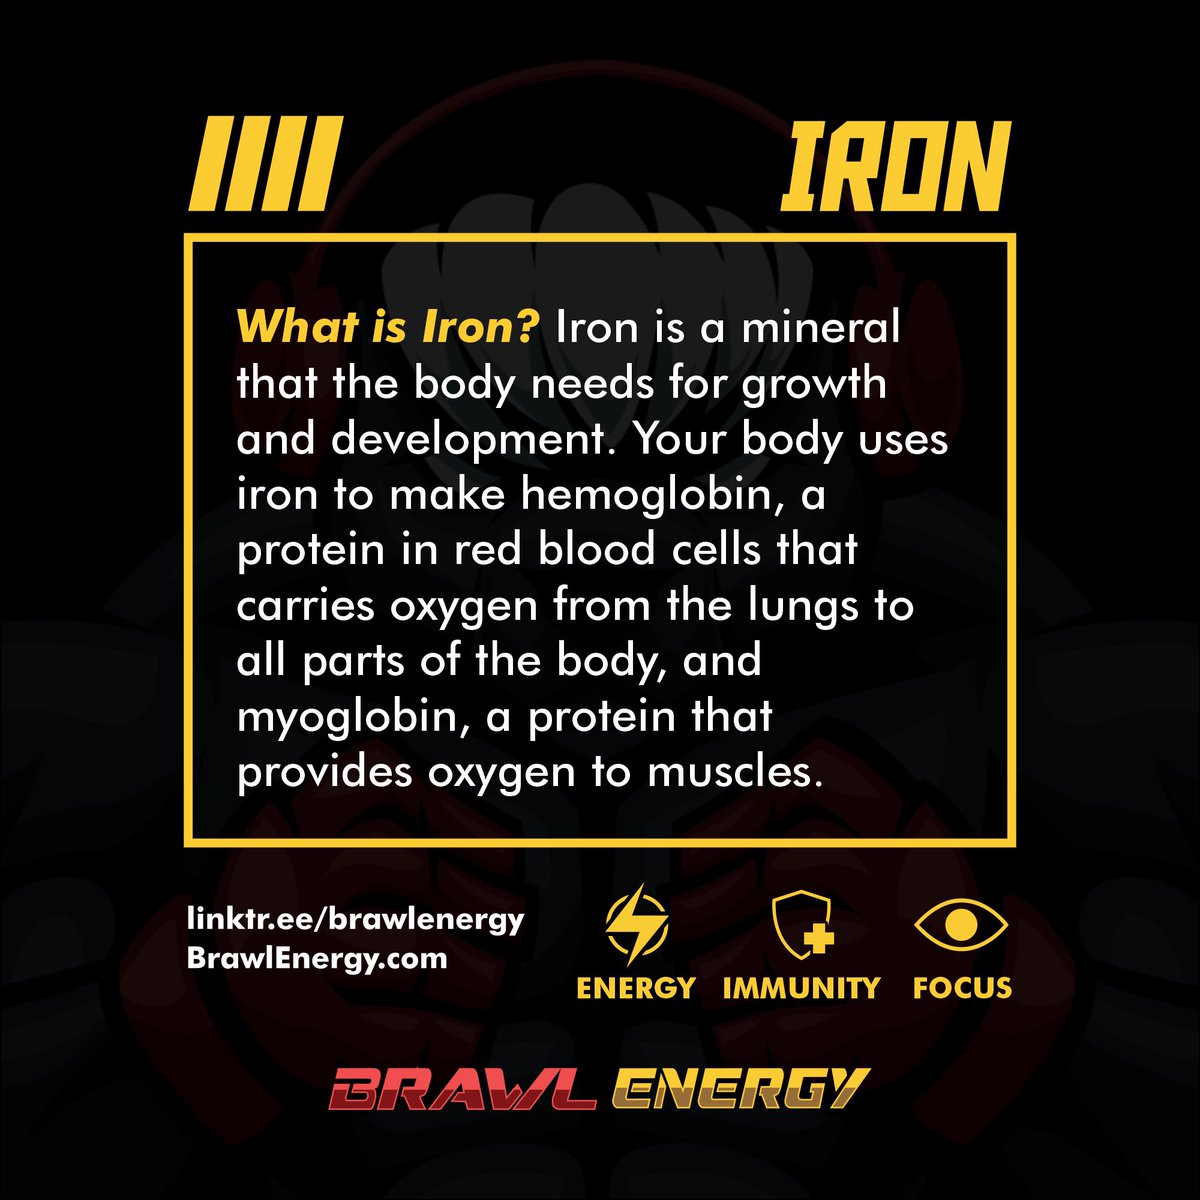 Brawl Energy ingredient education: Iron! #brawlenergy #energydrink #healthylifestyle #fitness #energy #immunity #focus #mind #body #igniteyourinnerhoneybadger